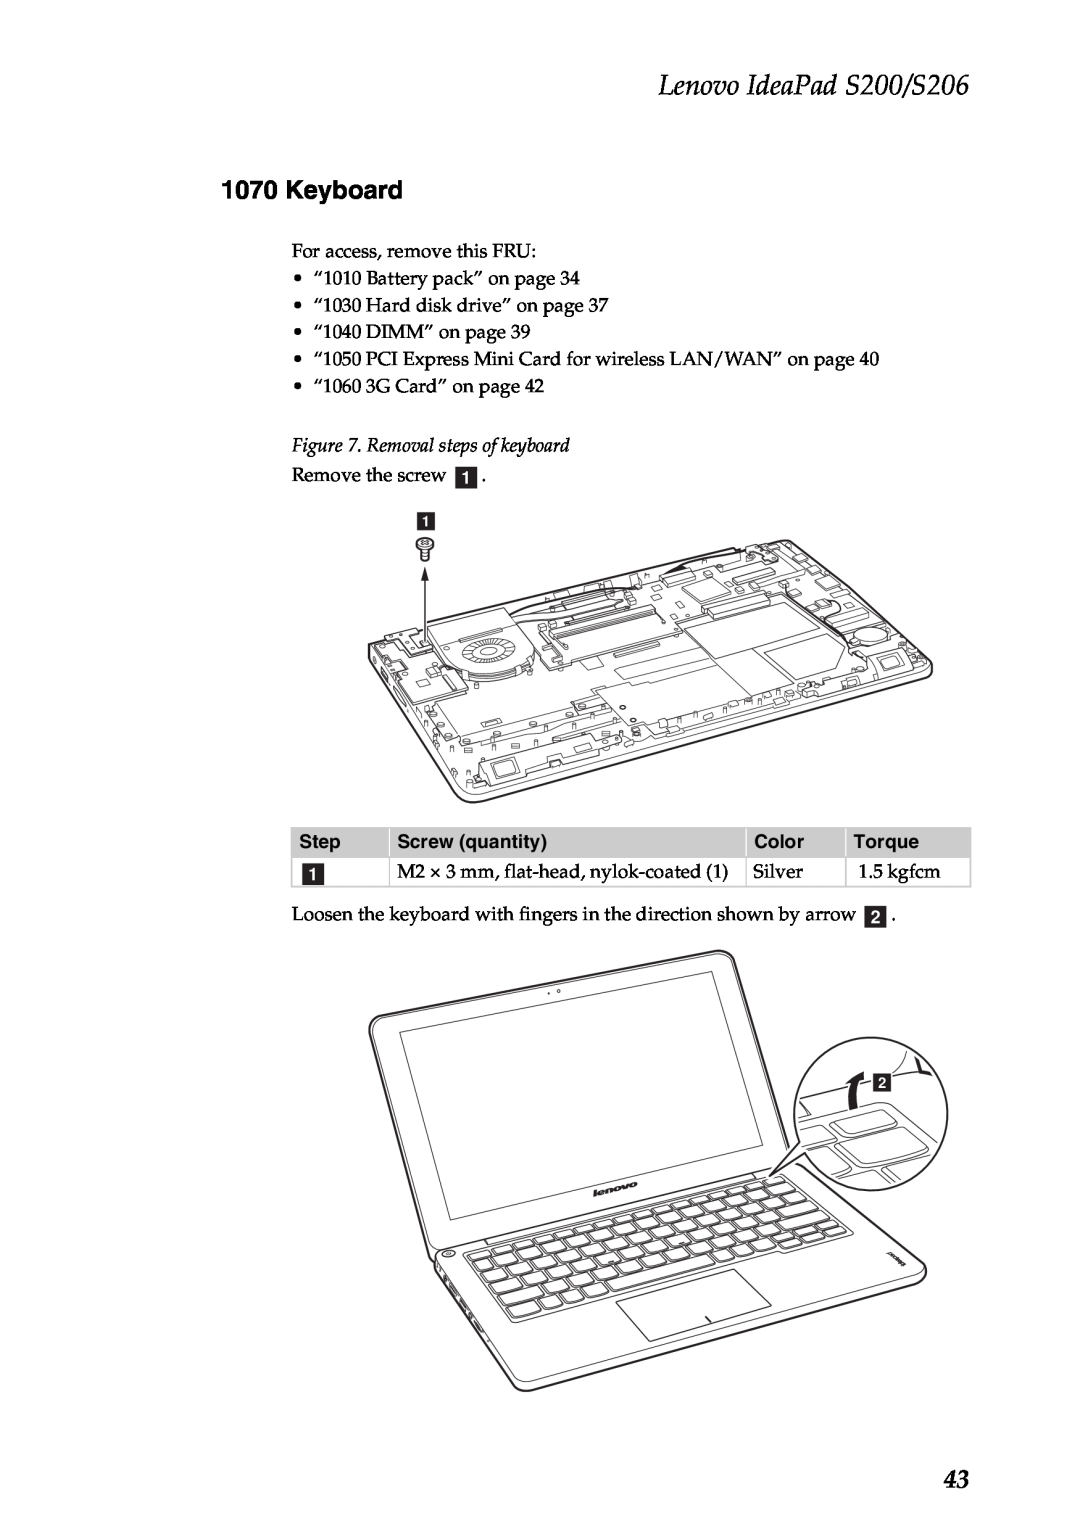 Lenovo manual Keyboard, Removal steps of keyboard, Lenovo IdeaPad S200/S206 